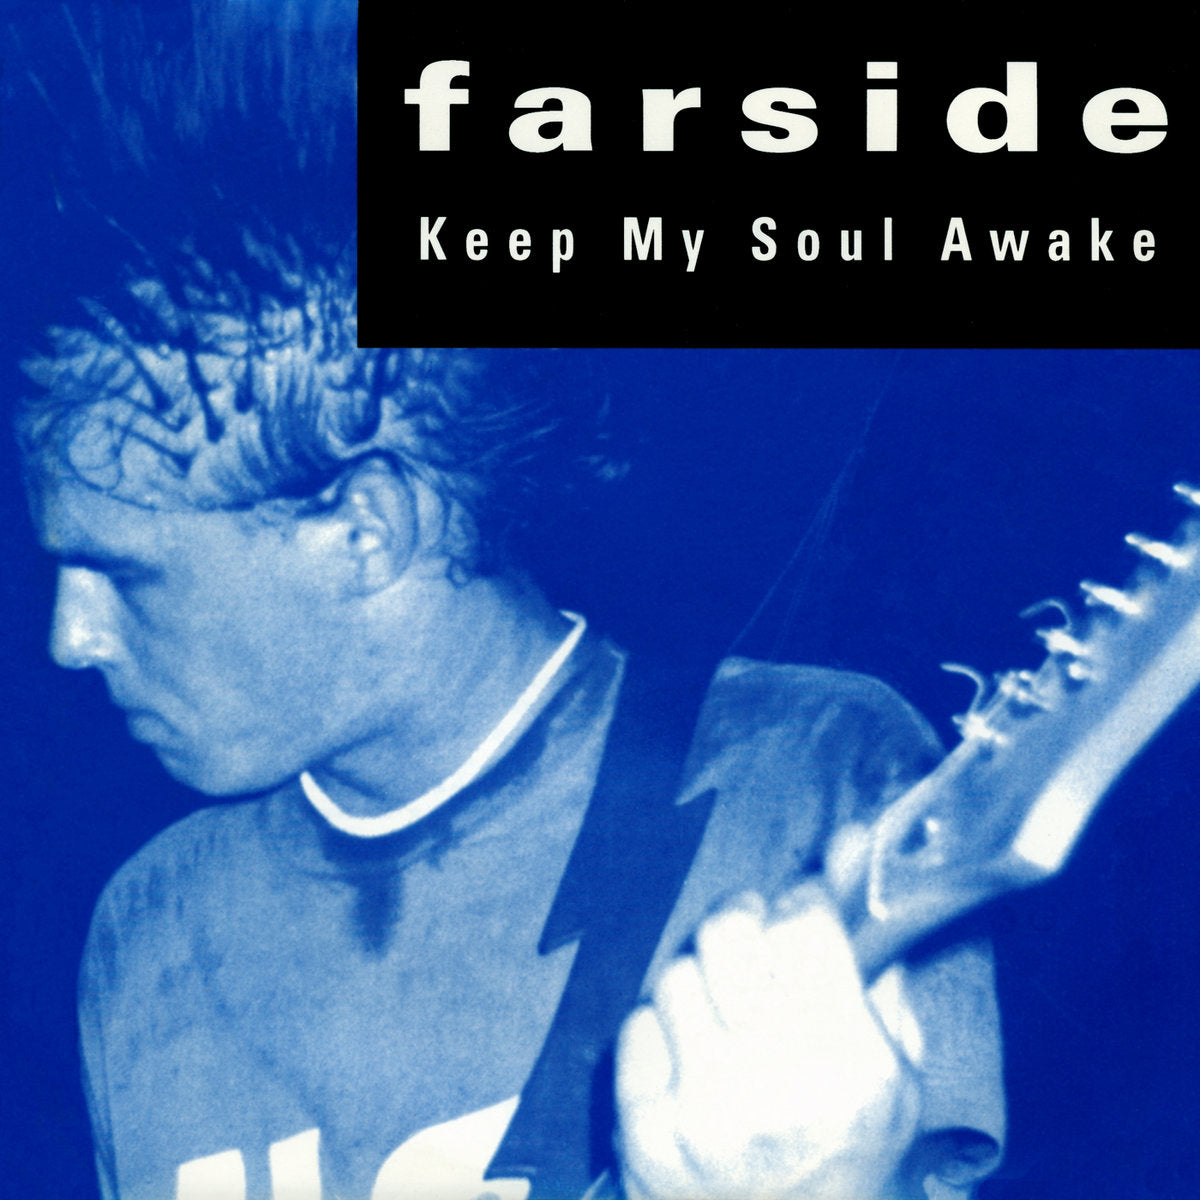 Farside "Keep My Soul Awake" 7" Vinyl